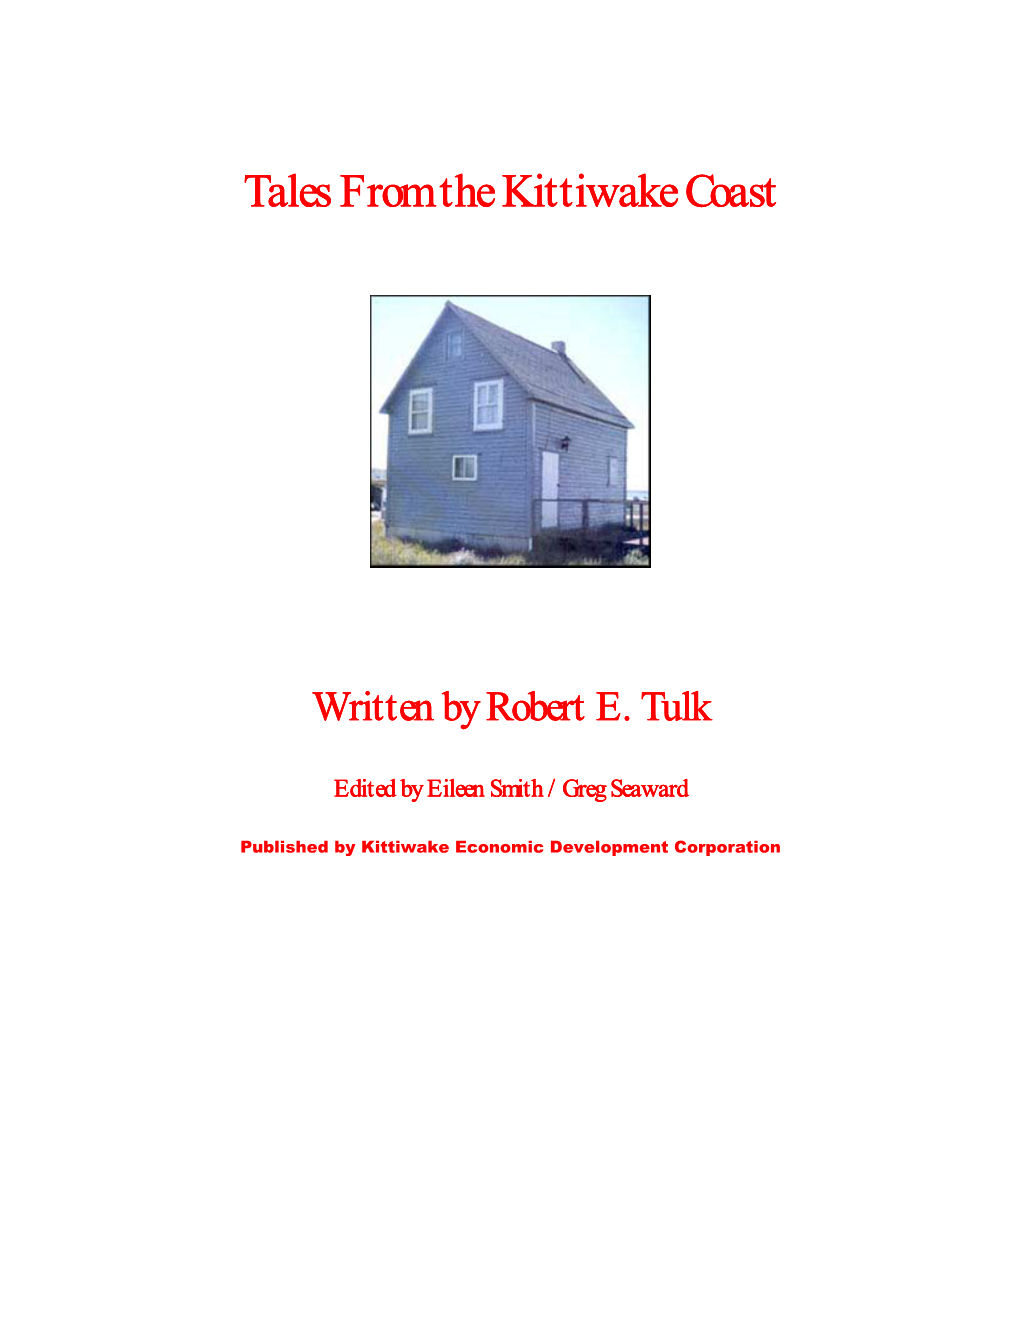 Tales from the Kittiwake Coast